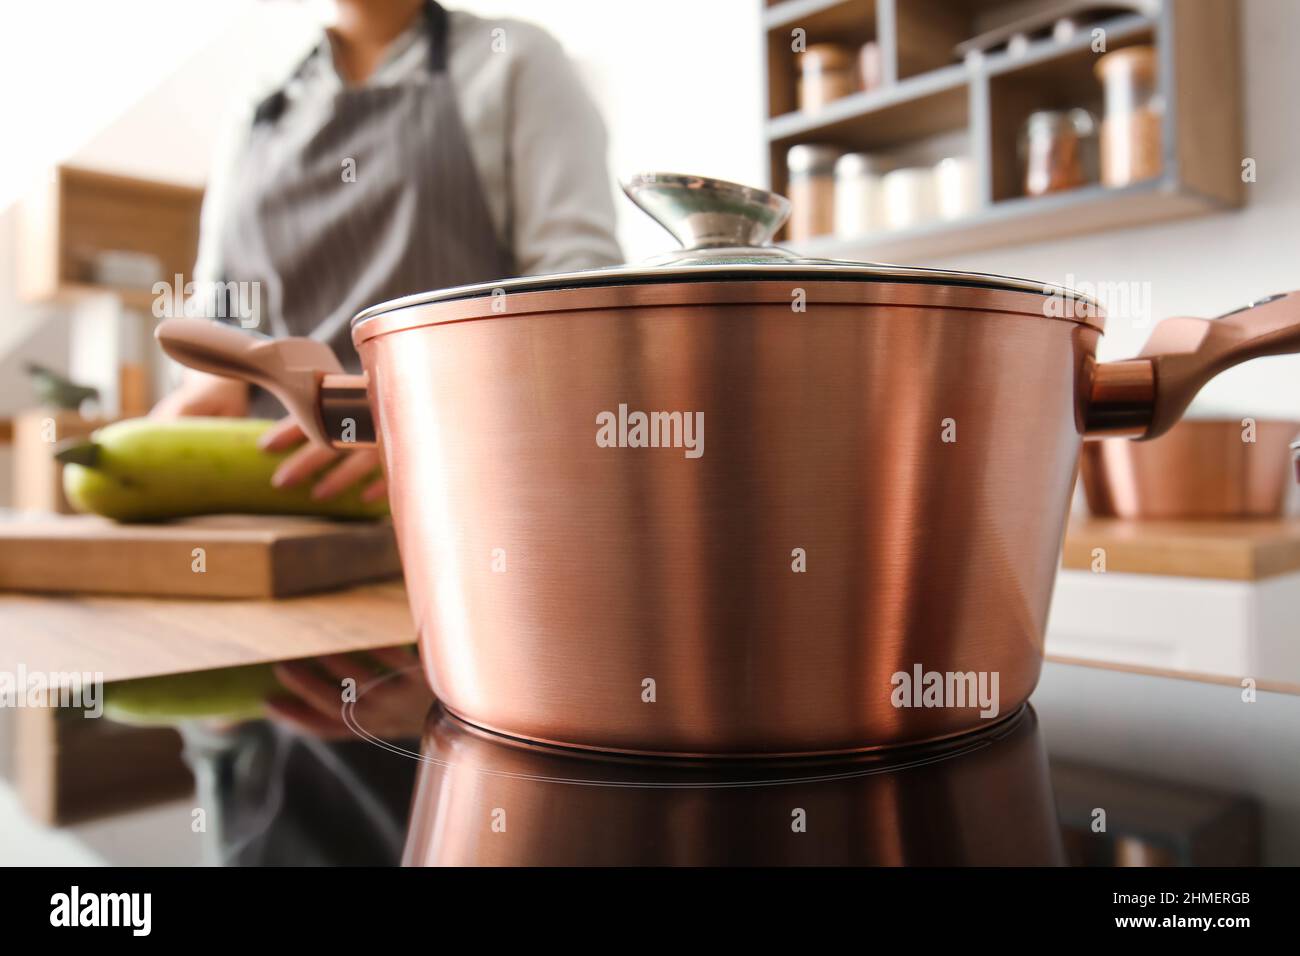 https://c8.alamy.com/comp/2HMERGB/big-cooking-pot-on-stove-in-kitchen-closeup-2HMERGB.jpg